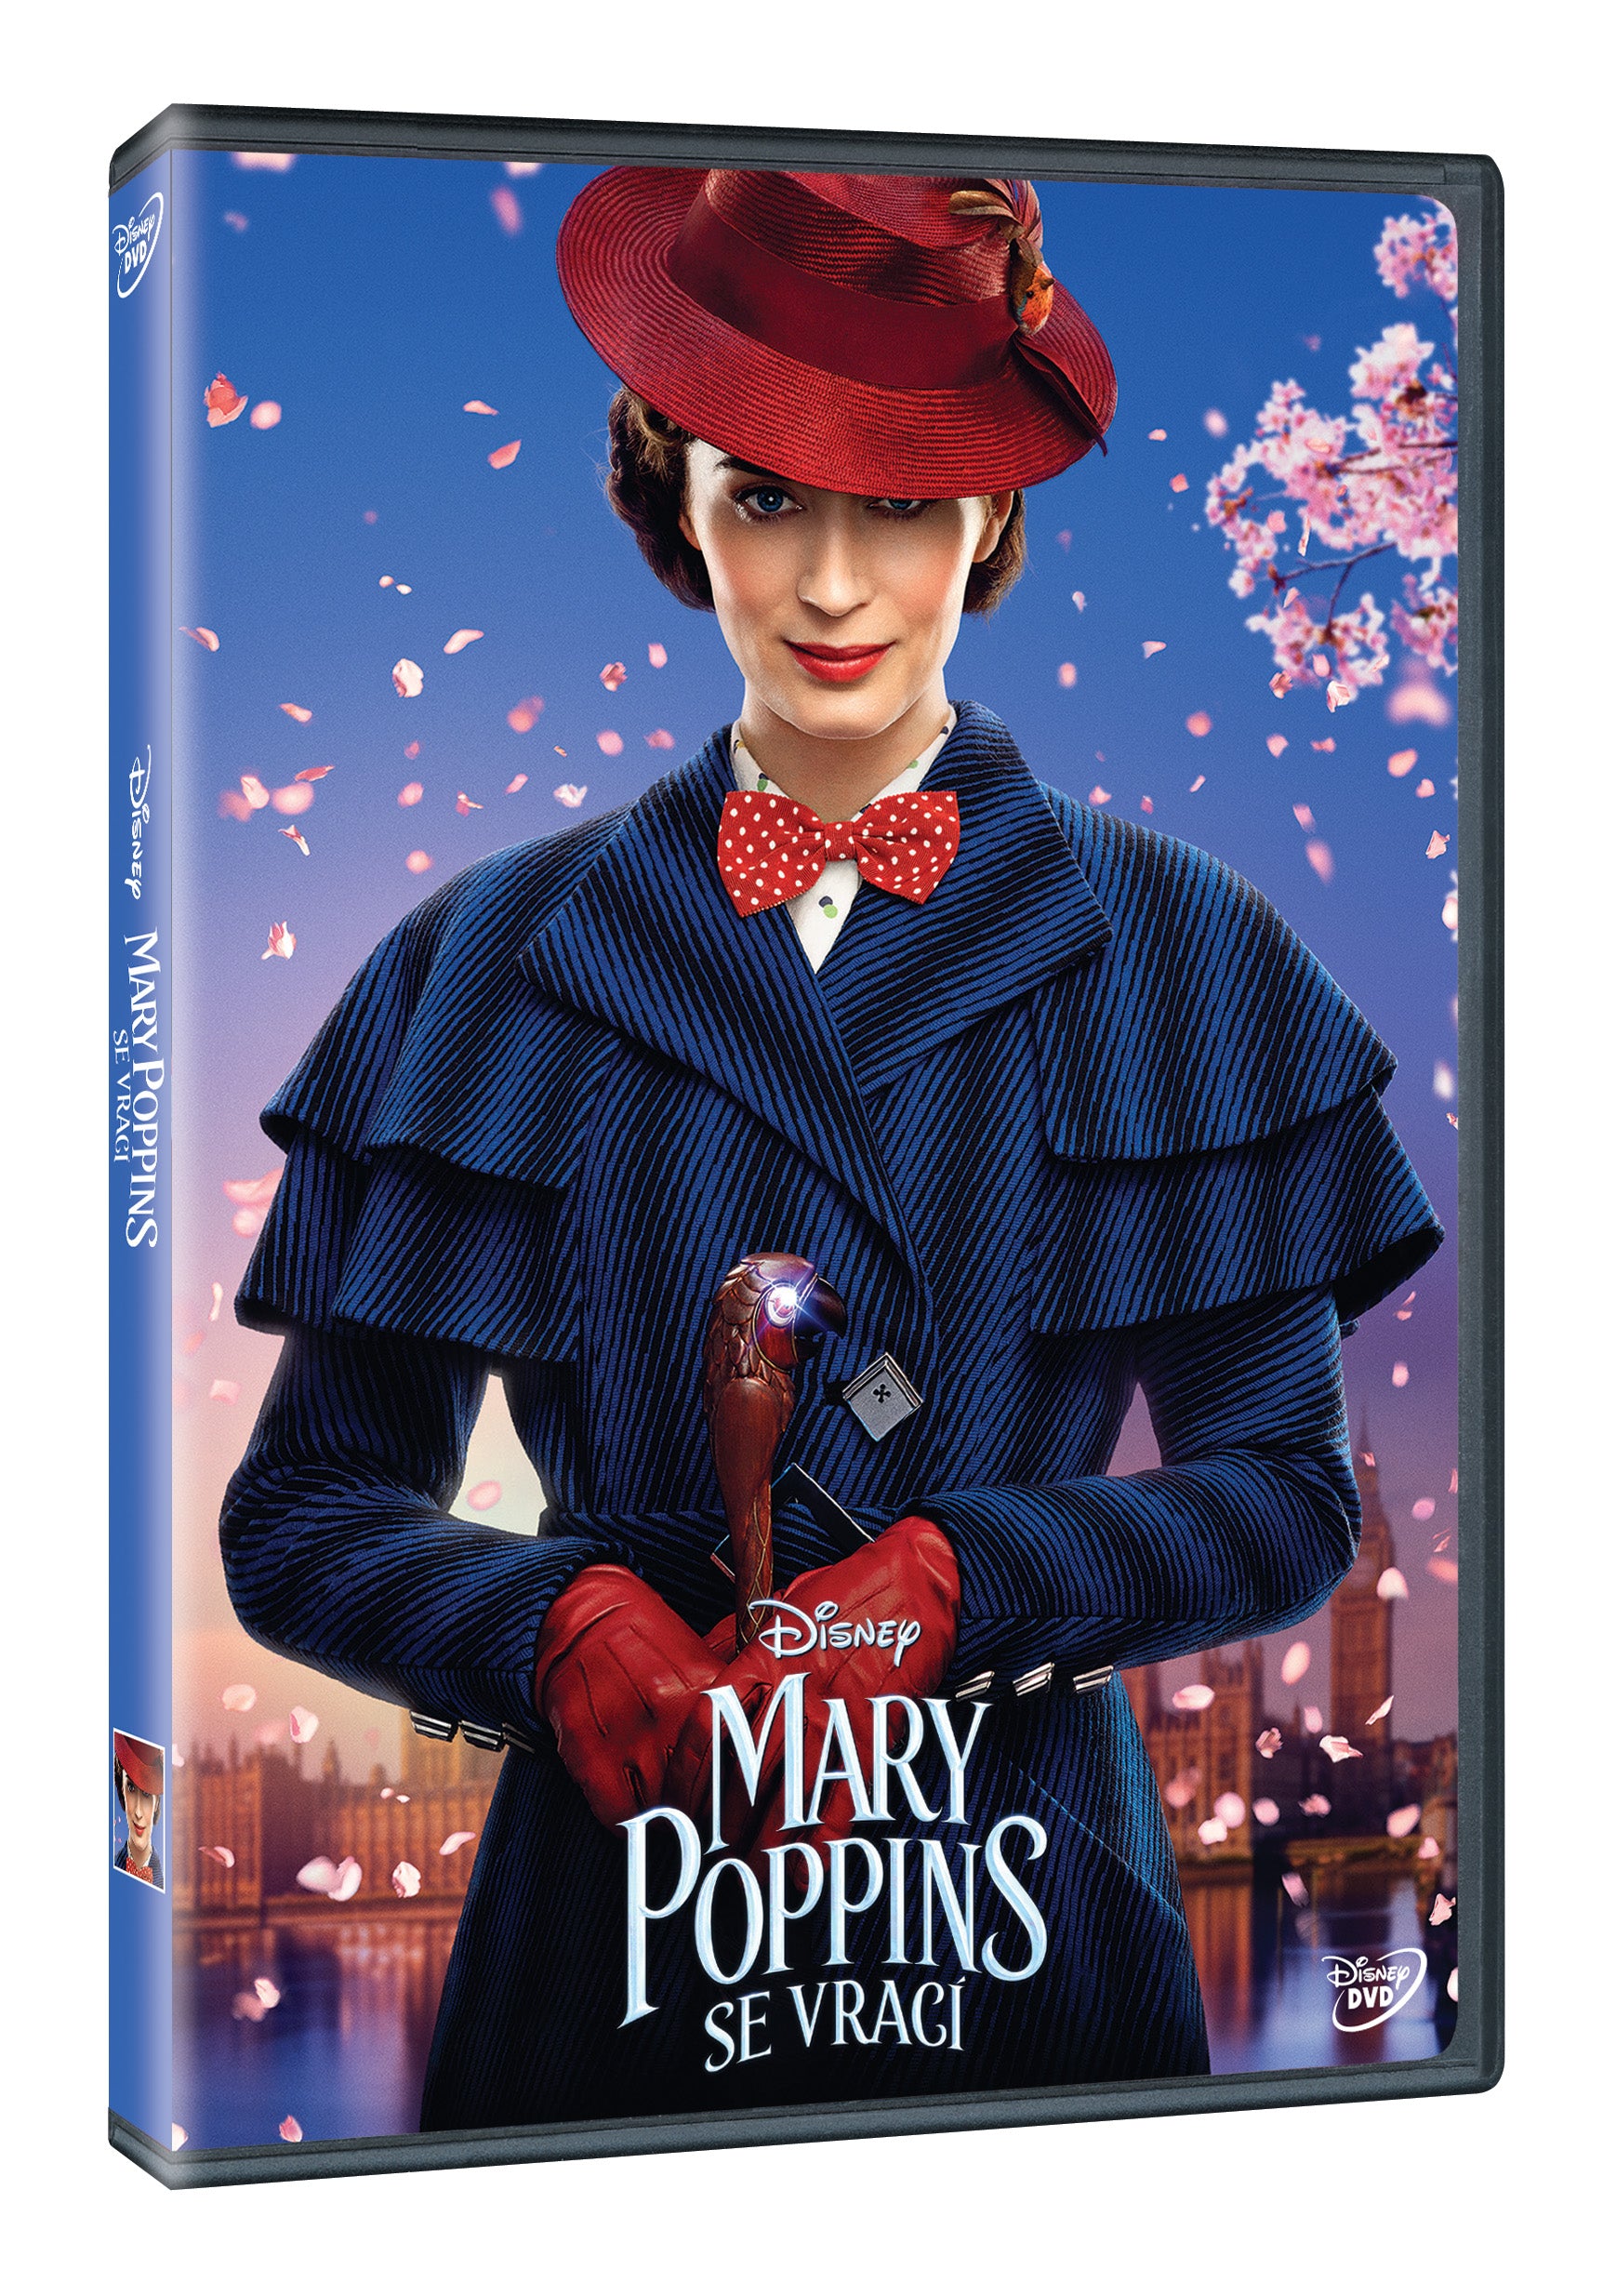 Mary Poppins se vraci DVD / Mary Poppins Returns